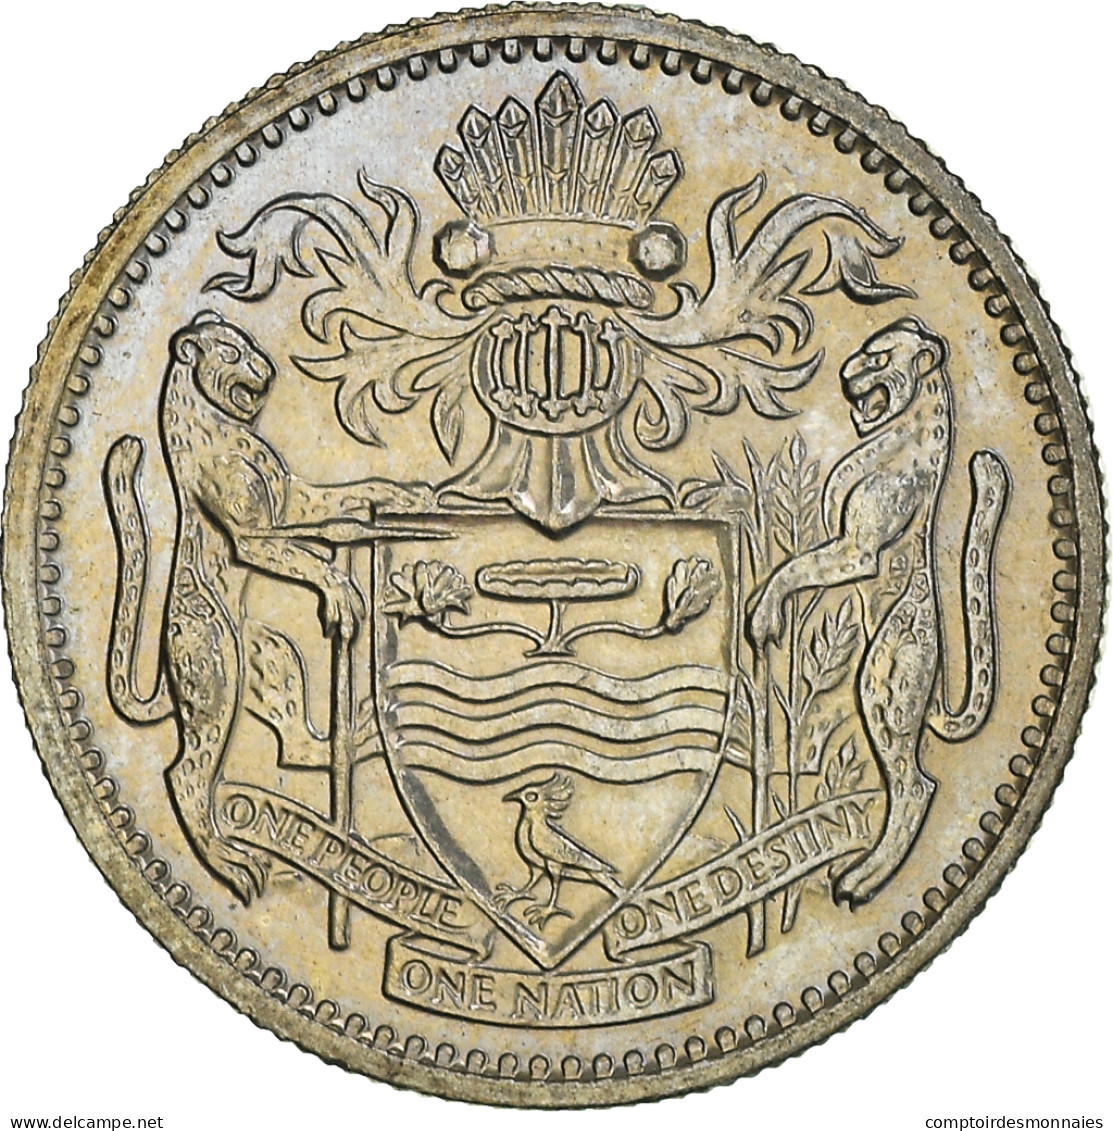 Monnaie, Guyana, 10 Cents, 1991, SPL+, Cupro-nickel, KM:33 - Guyana